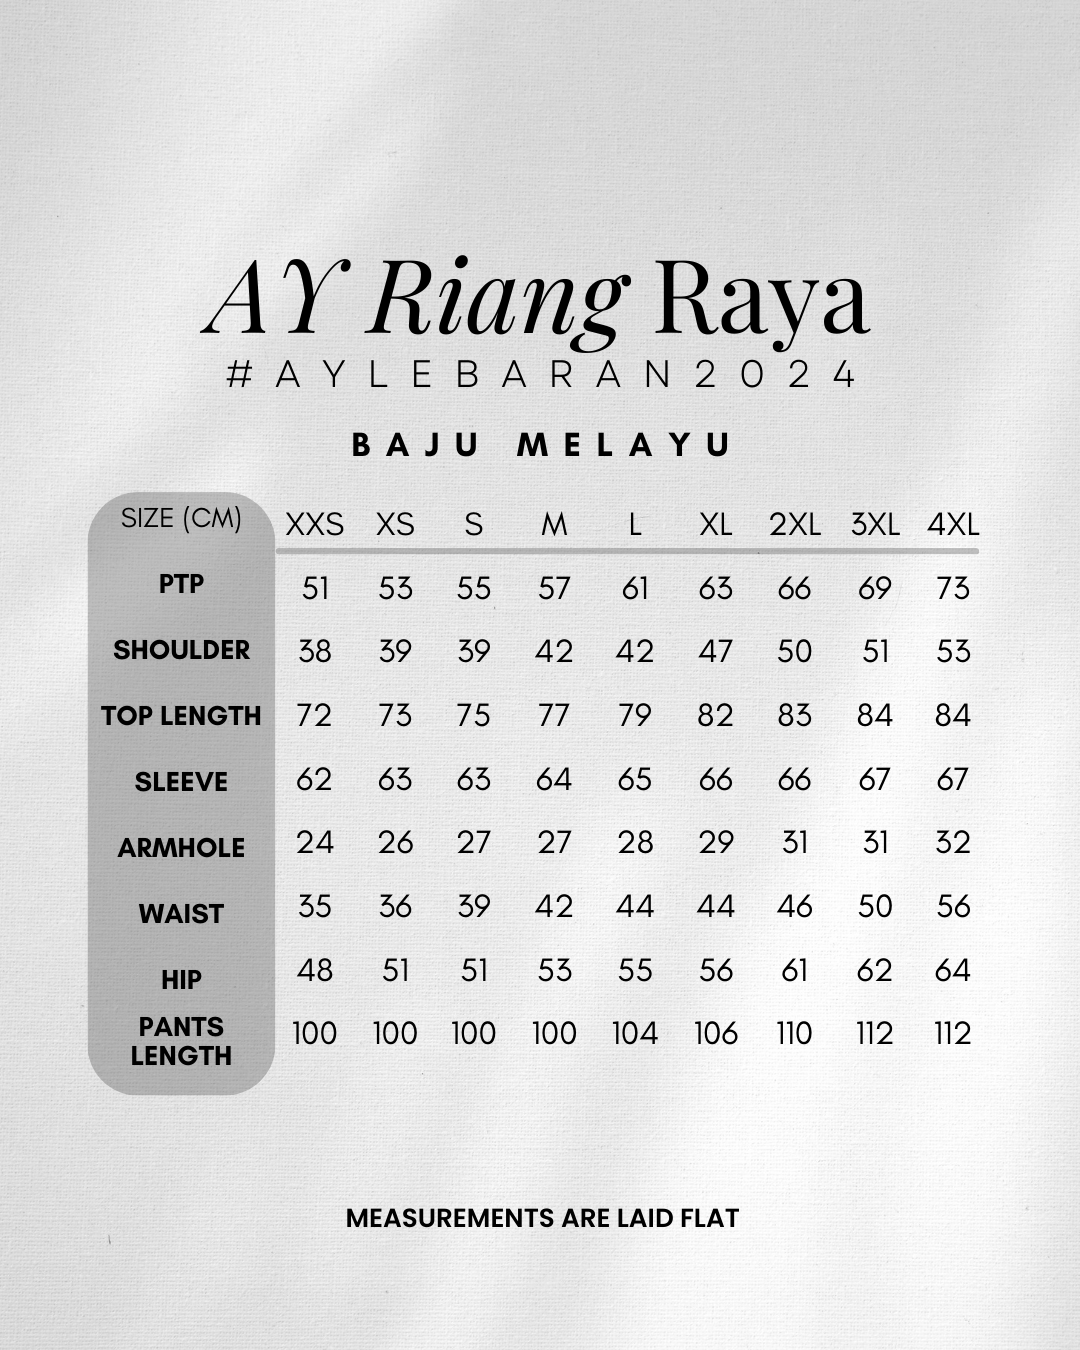 AYLEBARAN 2024 Ceria Men's Baju Melayu